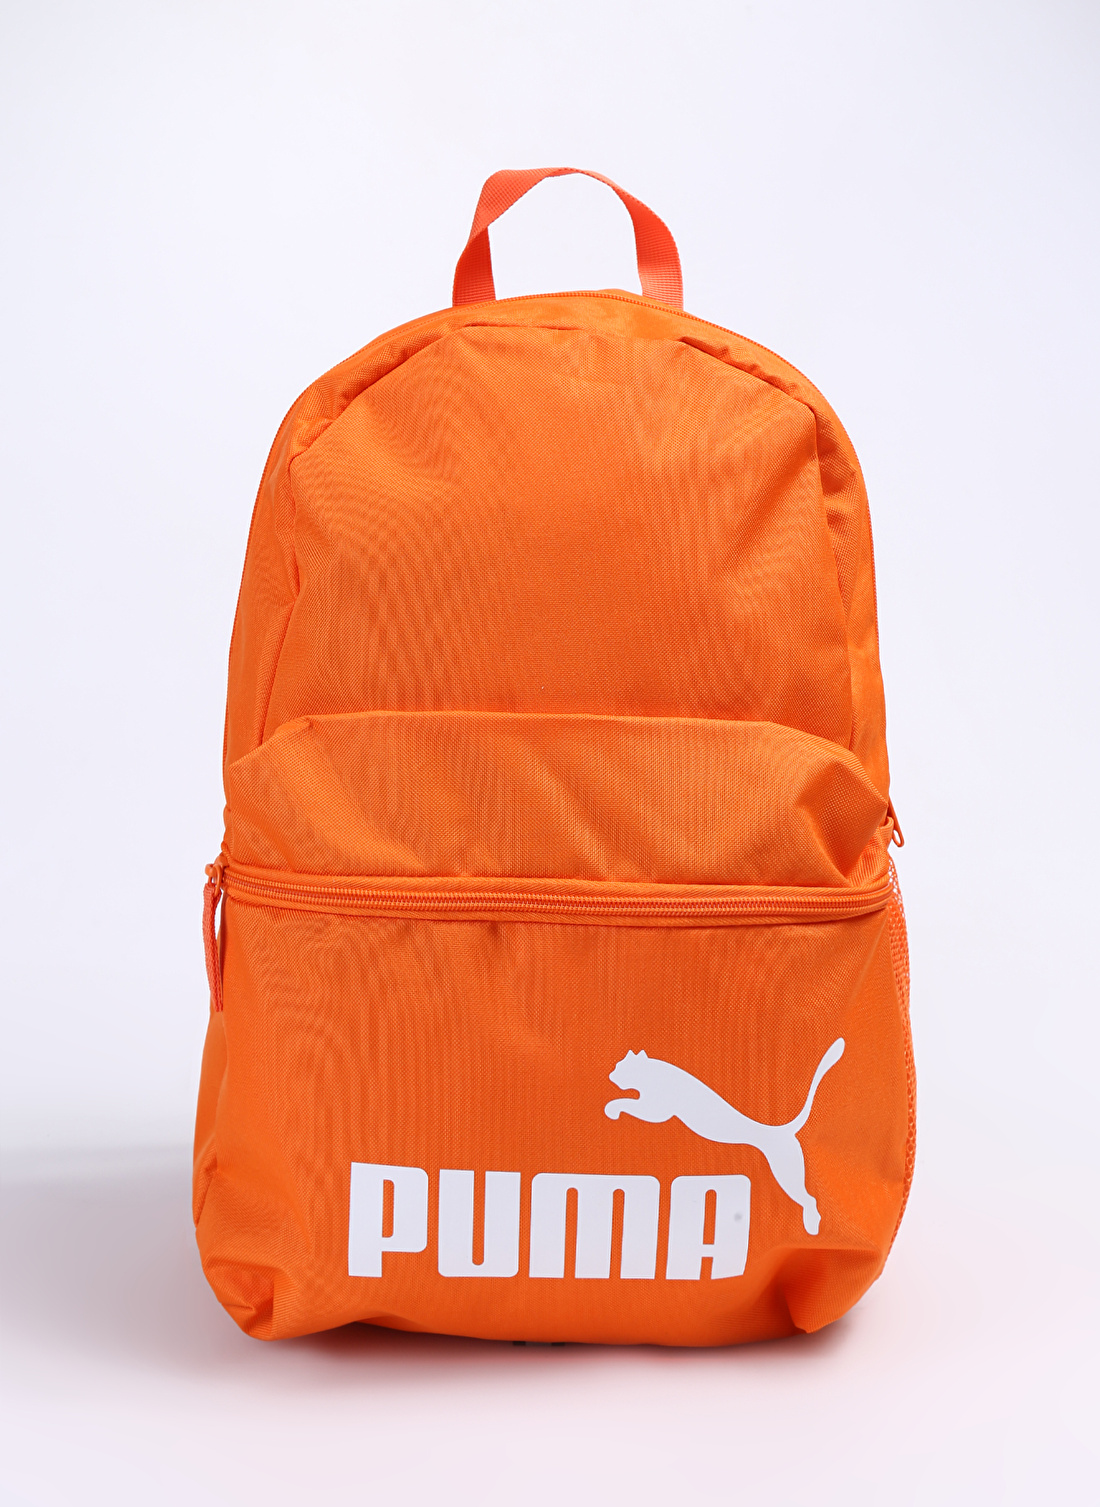 Puma 07548730  Phase Backpack Turuncu 14x30x44 cm Unisex Sırt Çantası  